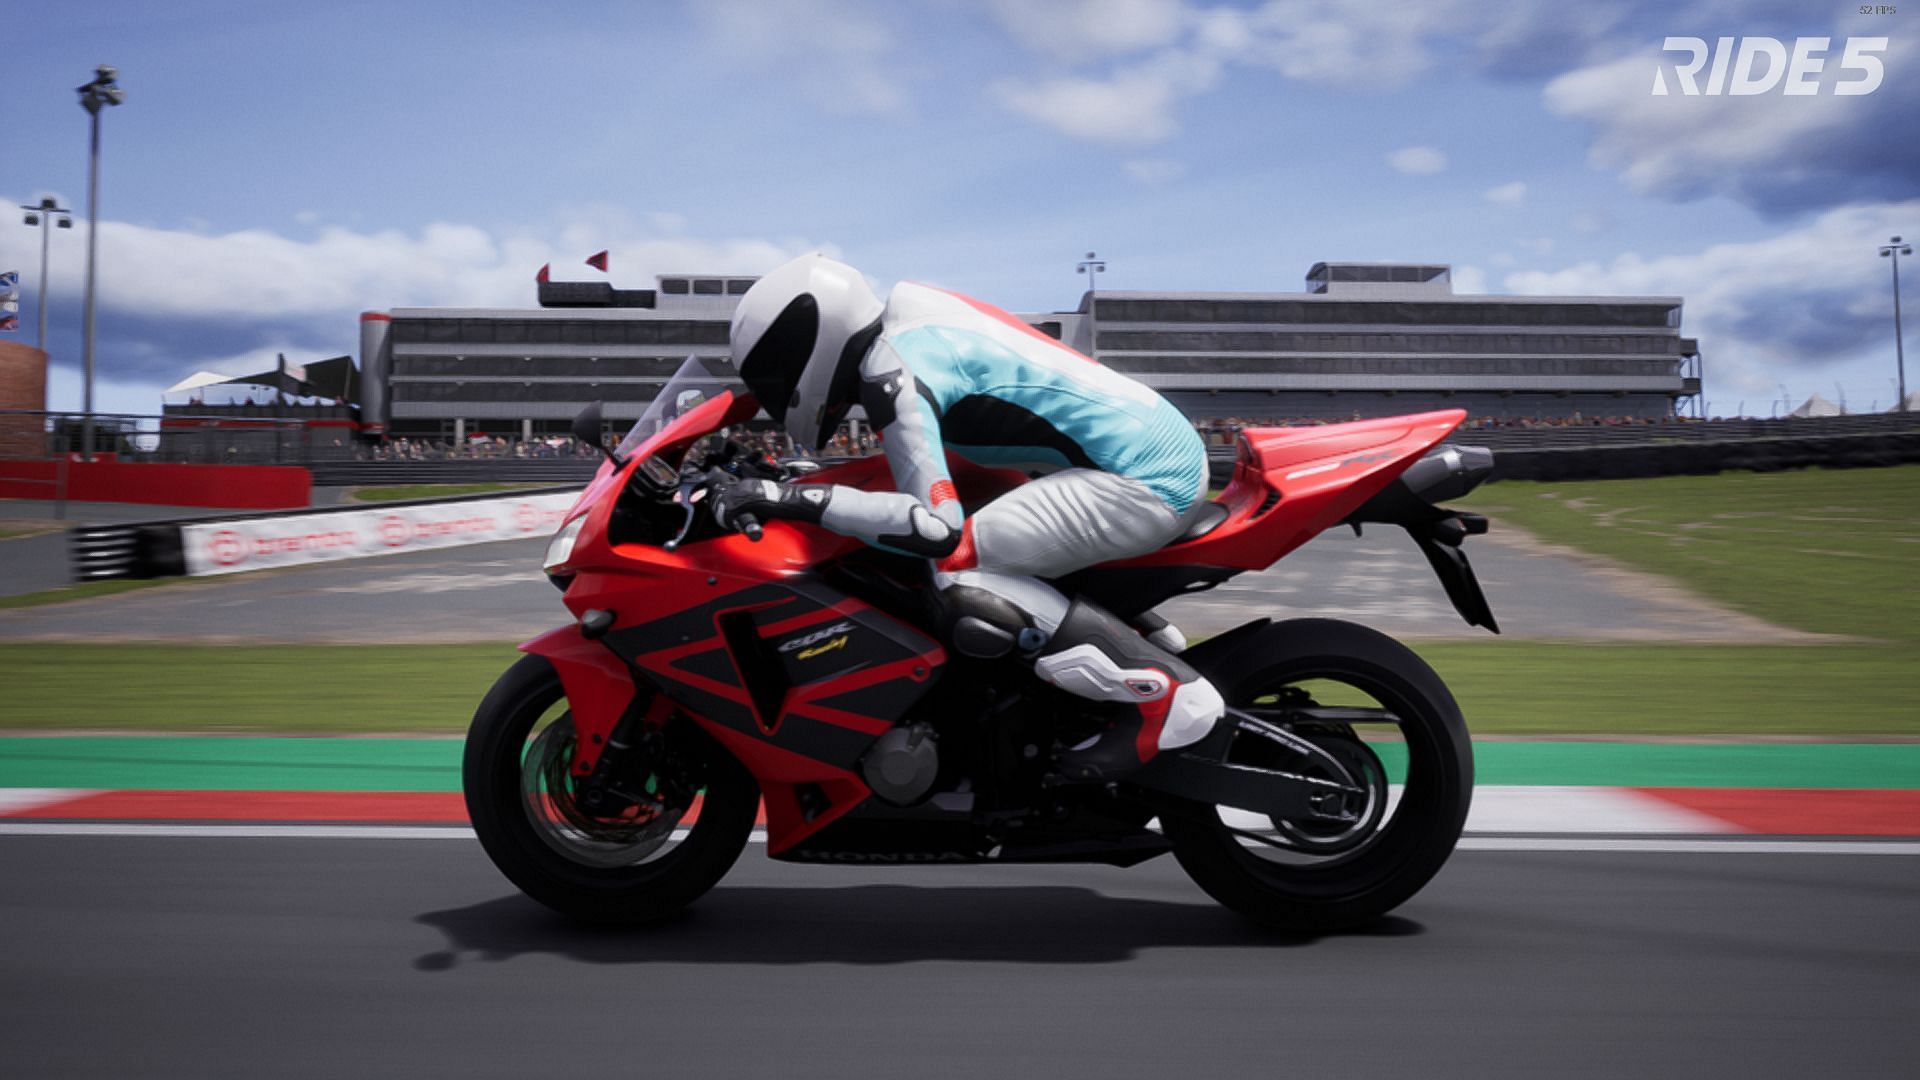 Ride 5 is a state of the art motorbike racing simulator (Image via Milestone)